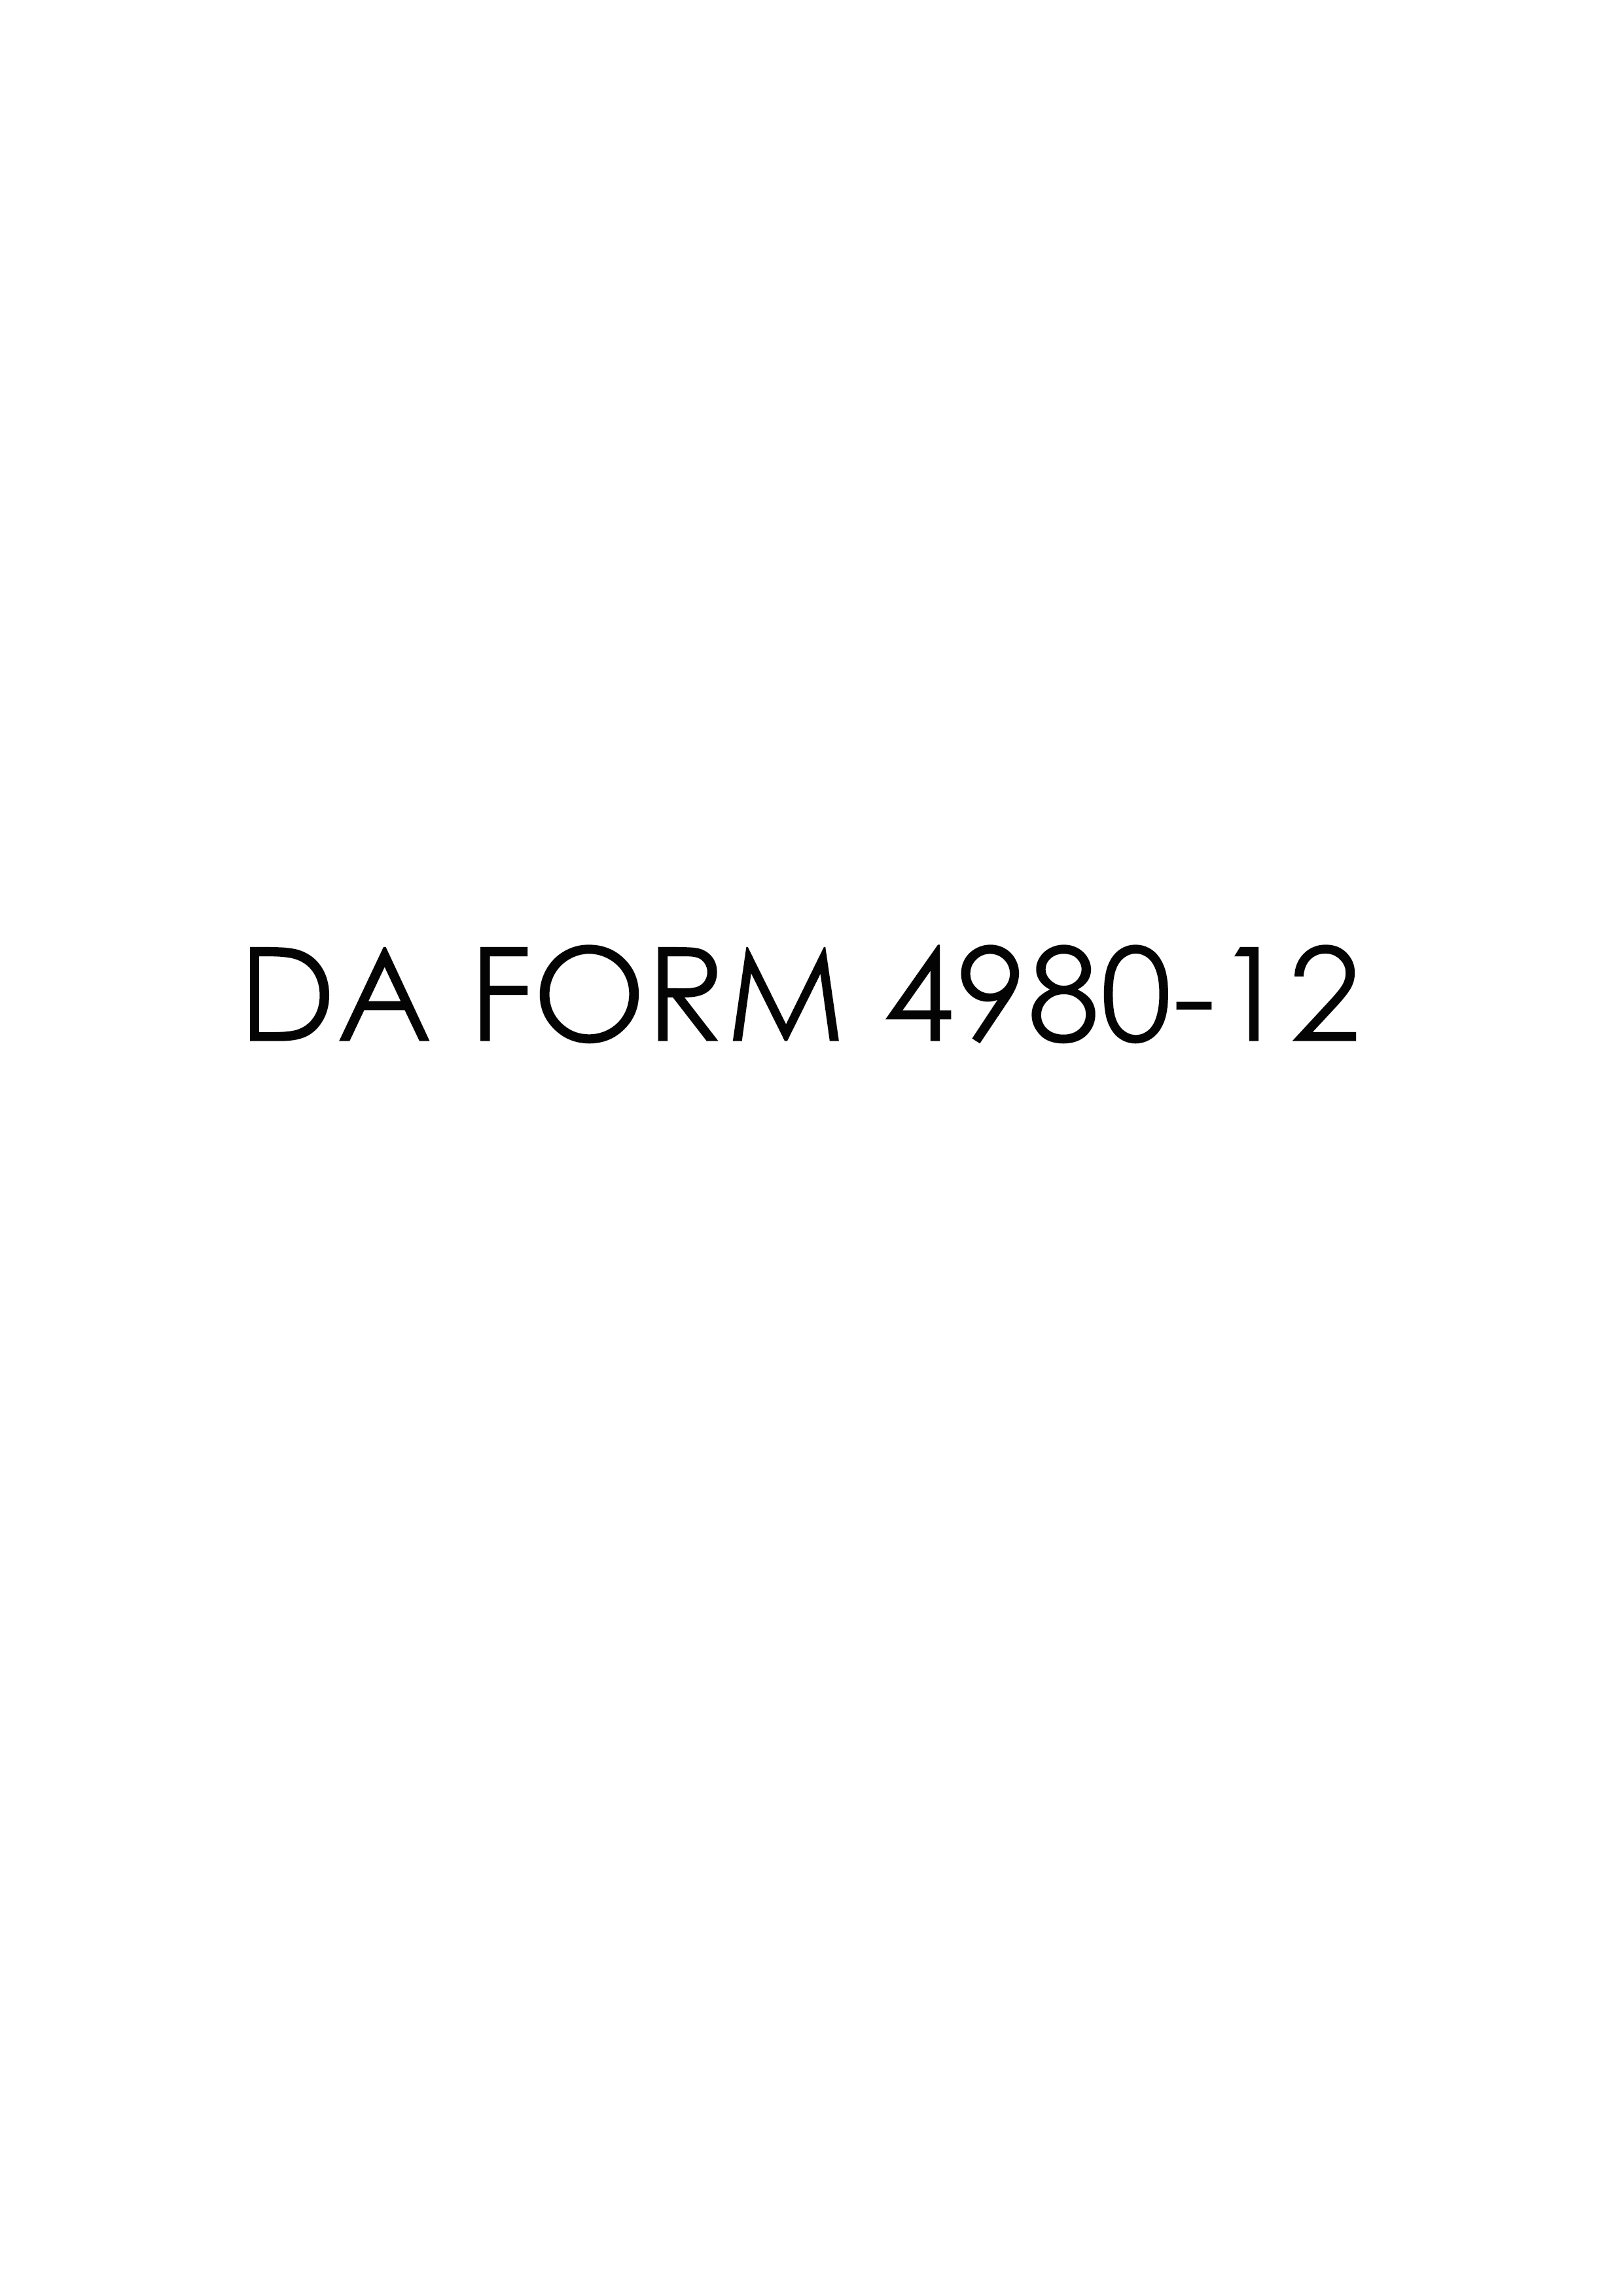 da Form 4980-12 fillable